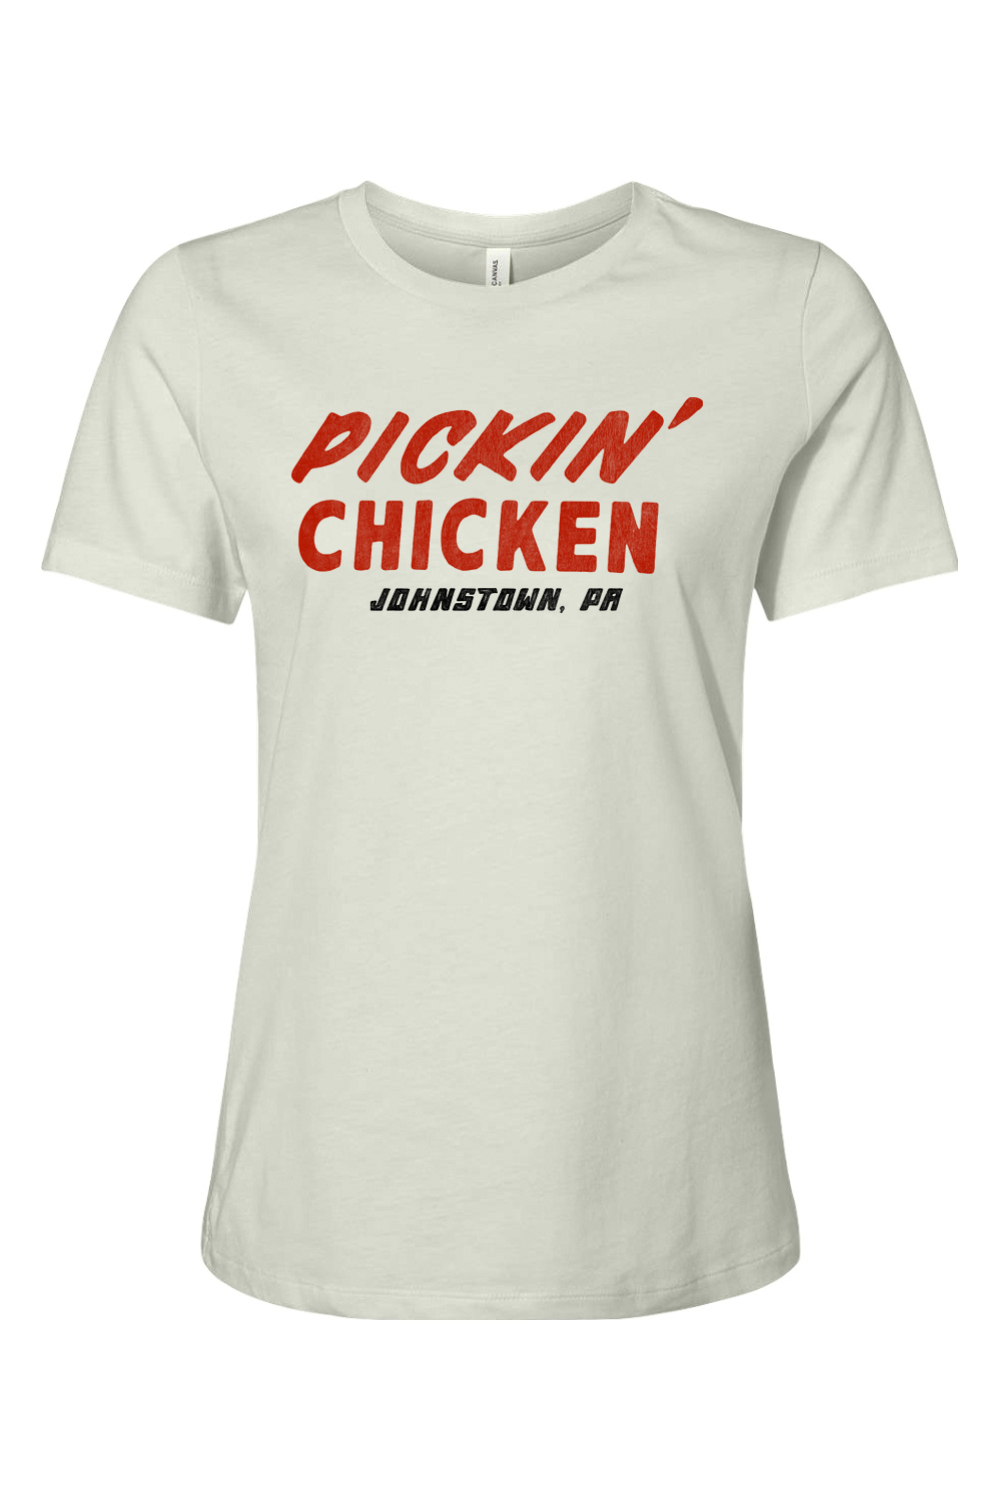 Pickin' Chicken - Johnstown, PA - Ladies Tee - Yinzylvania